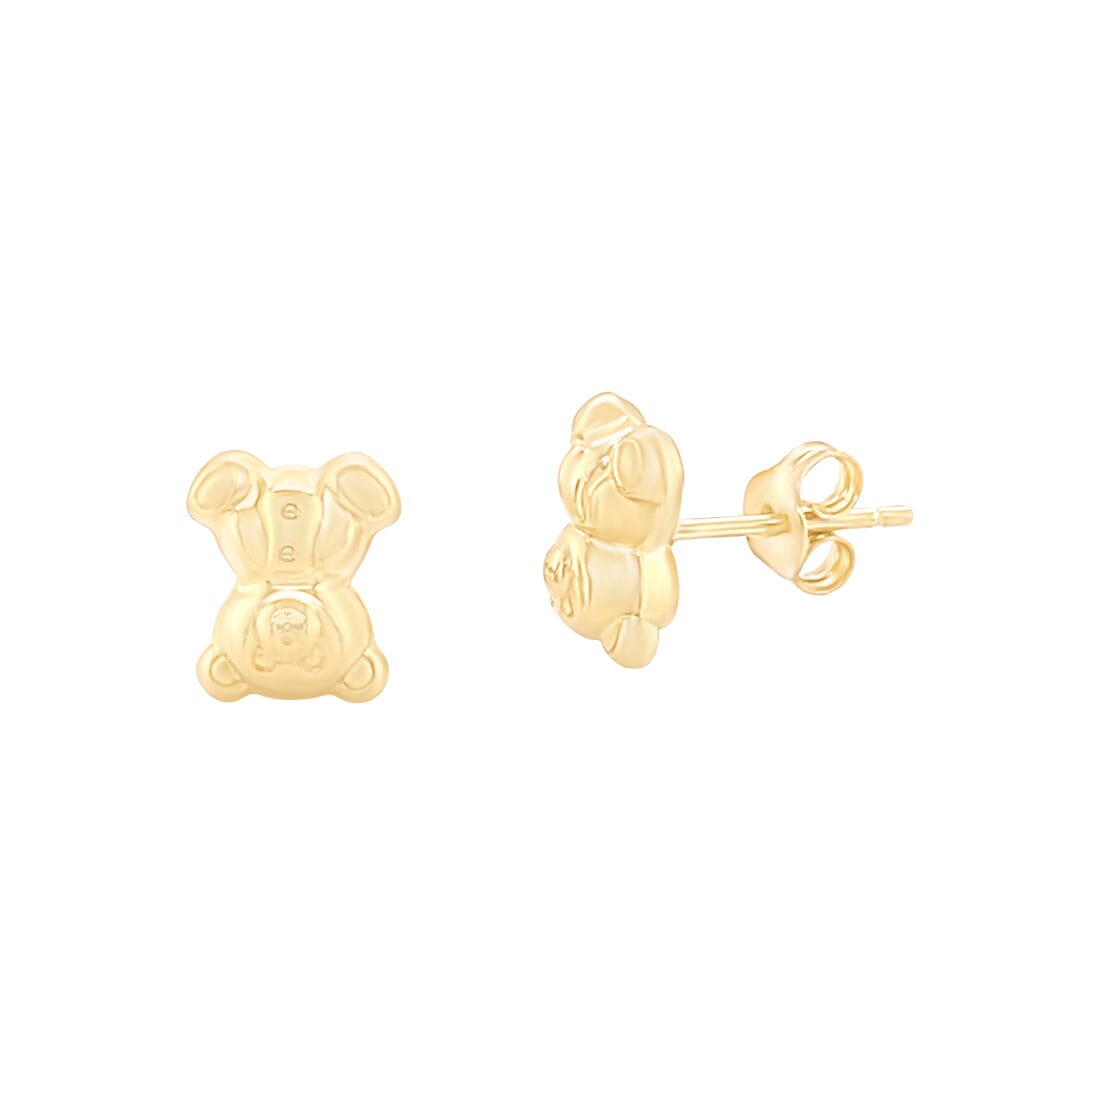 Children's Teddy Bear Stud Earrings in 9ct Yellow Gold Silver Infused Earrings Bevilles 